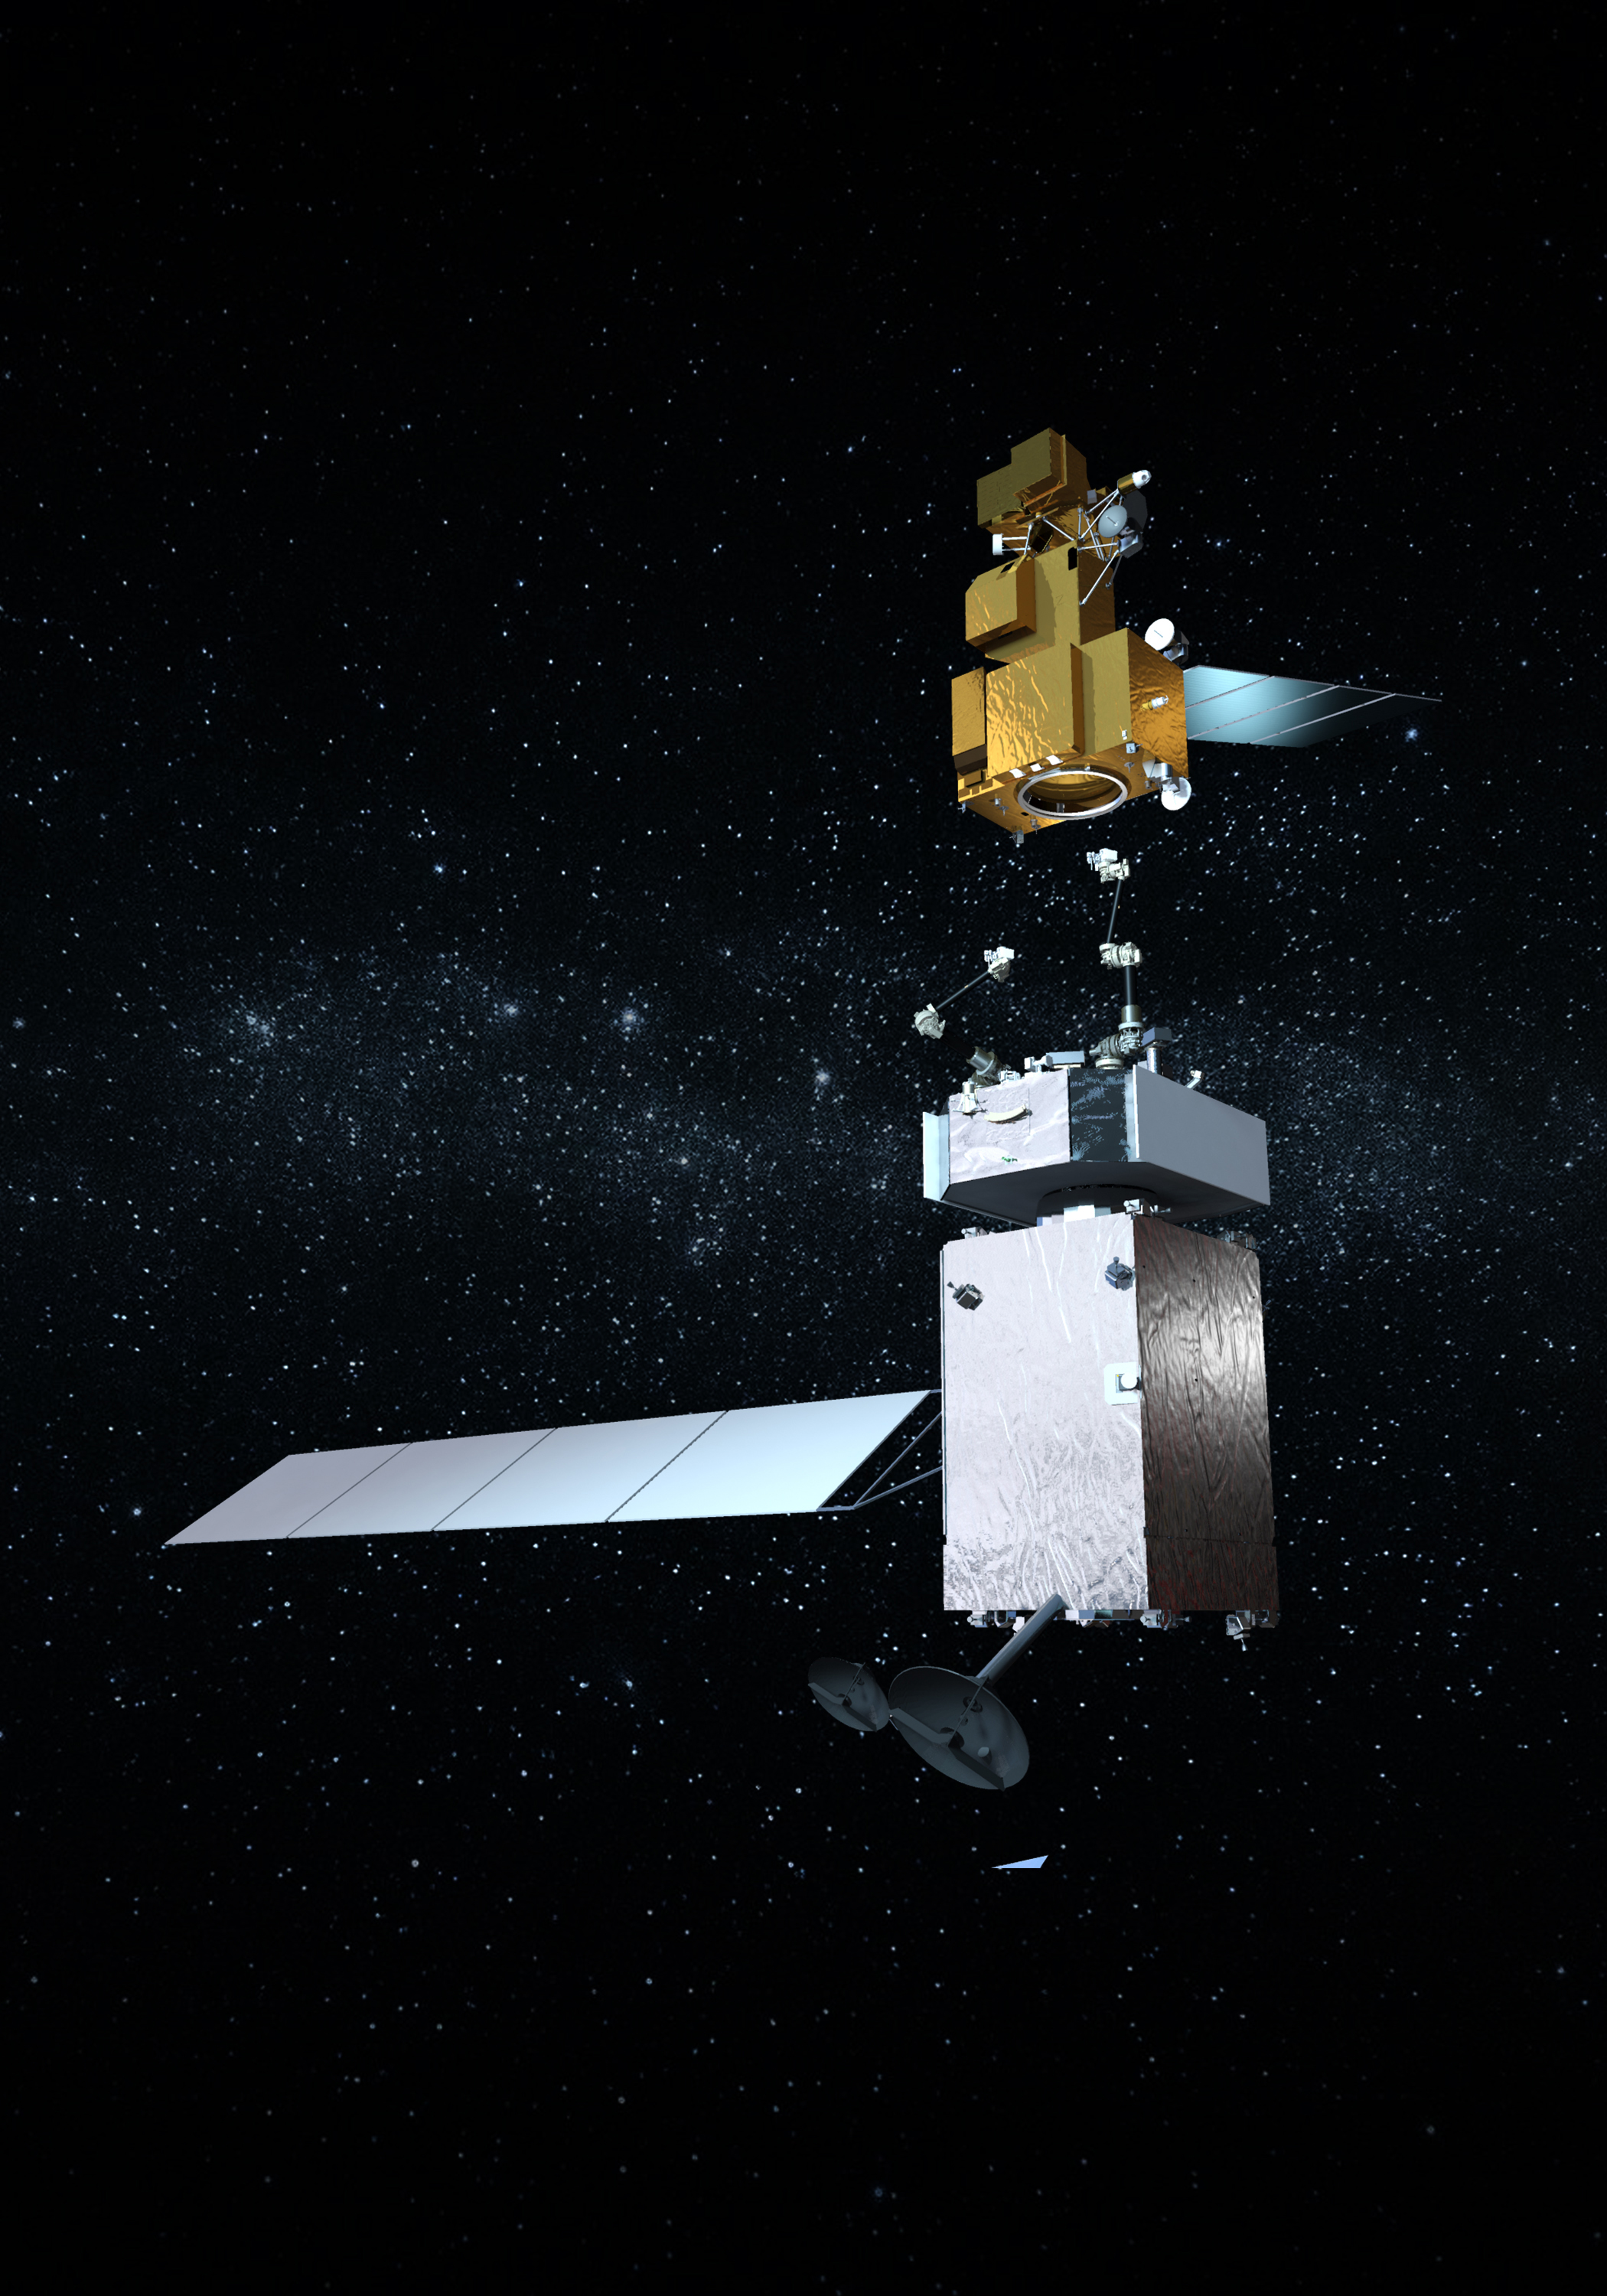 SSL working with NASA to build satellite servicing spacecraft. Image: NASA